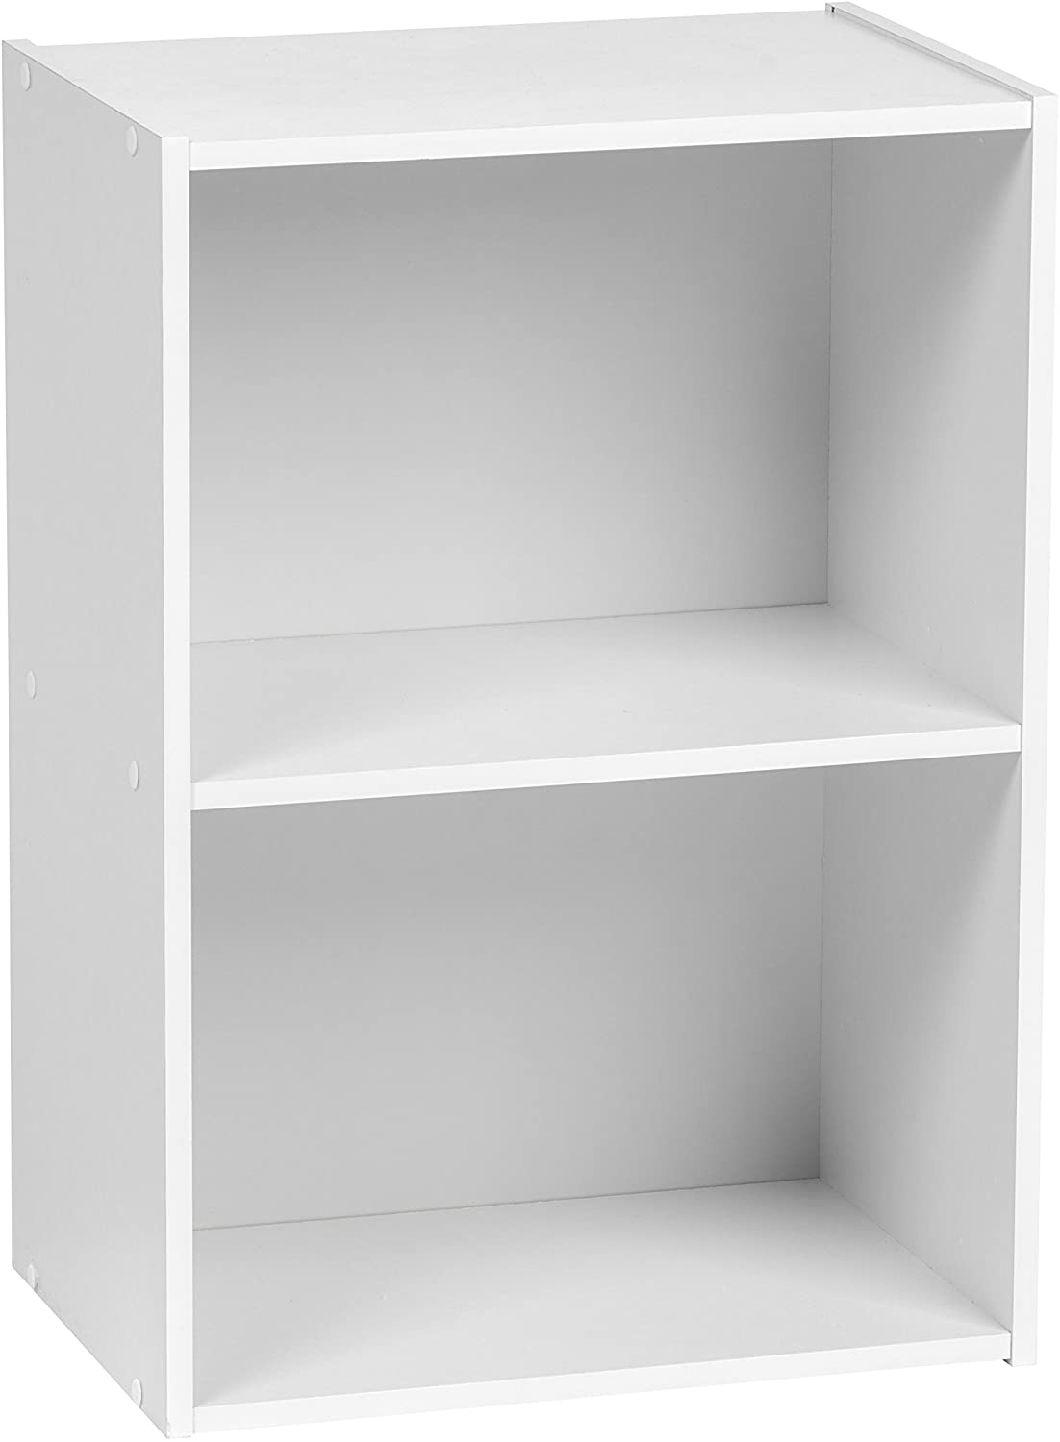 Modern White Bookshelf Bookcase Storage Shelf for Home Office